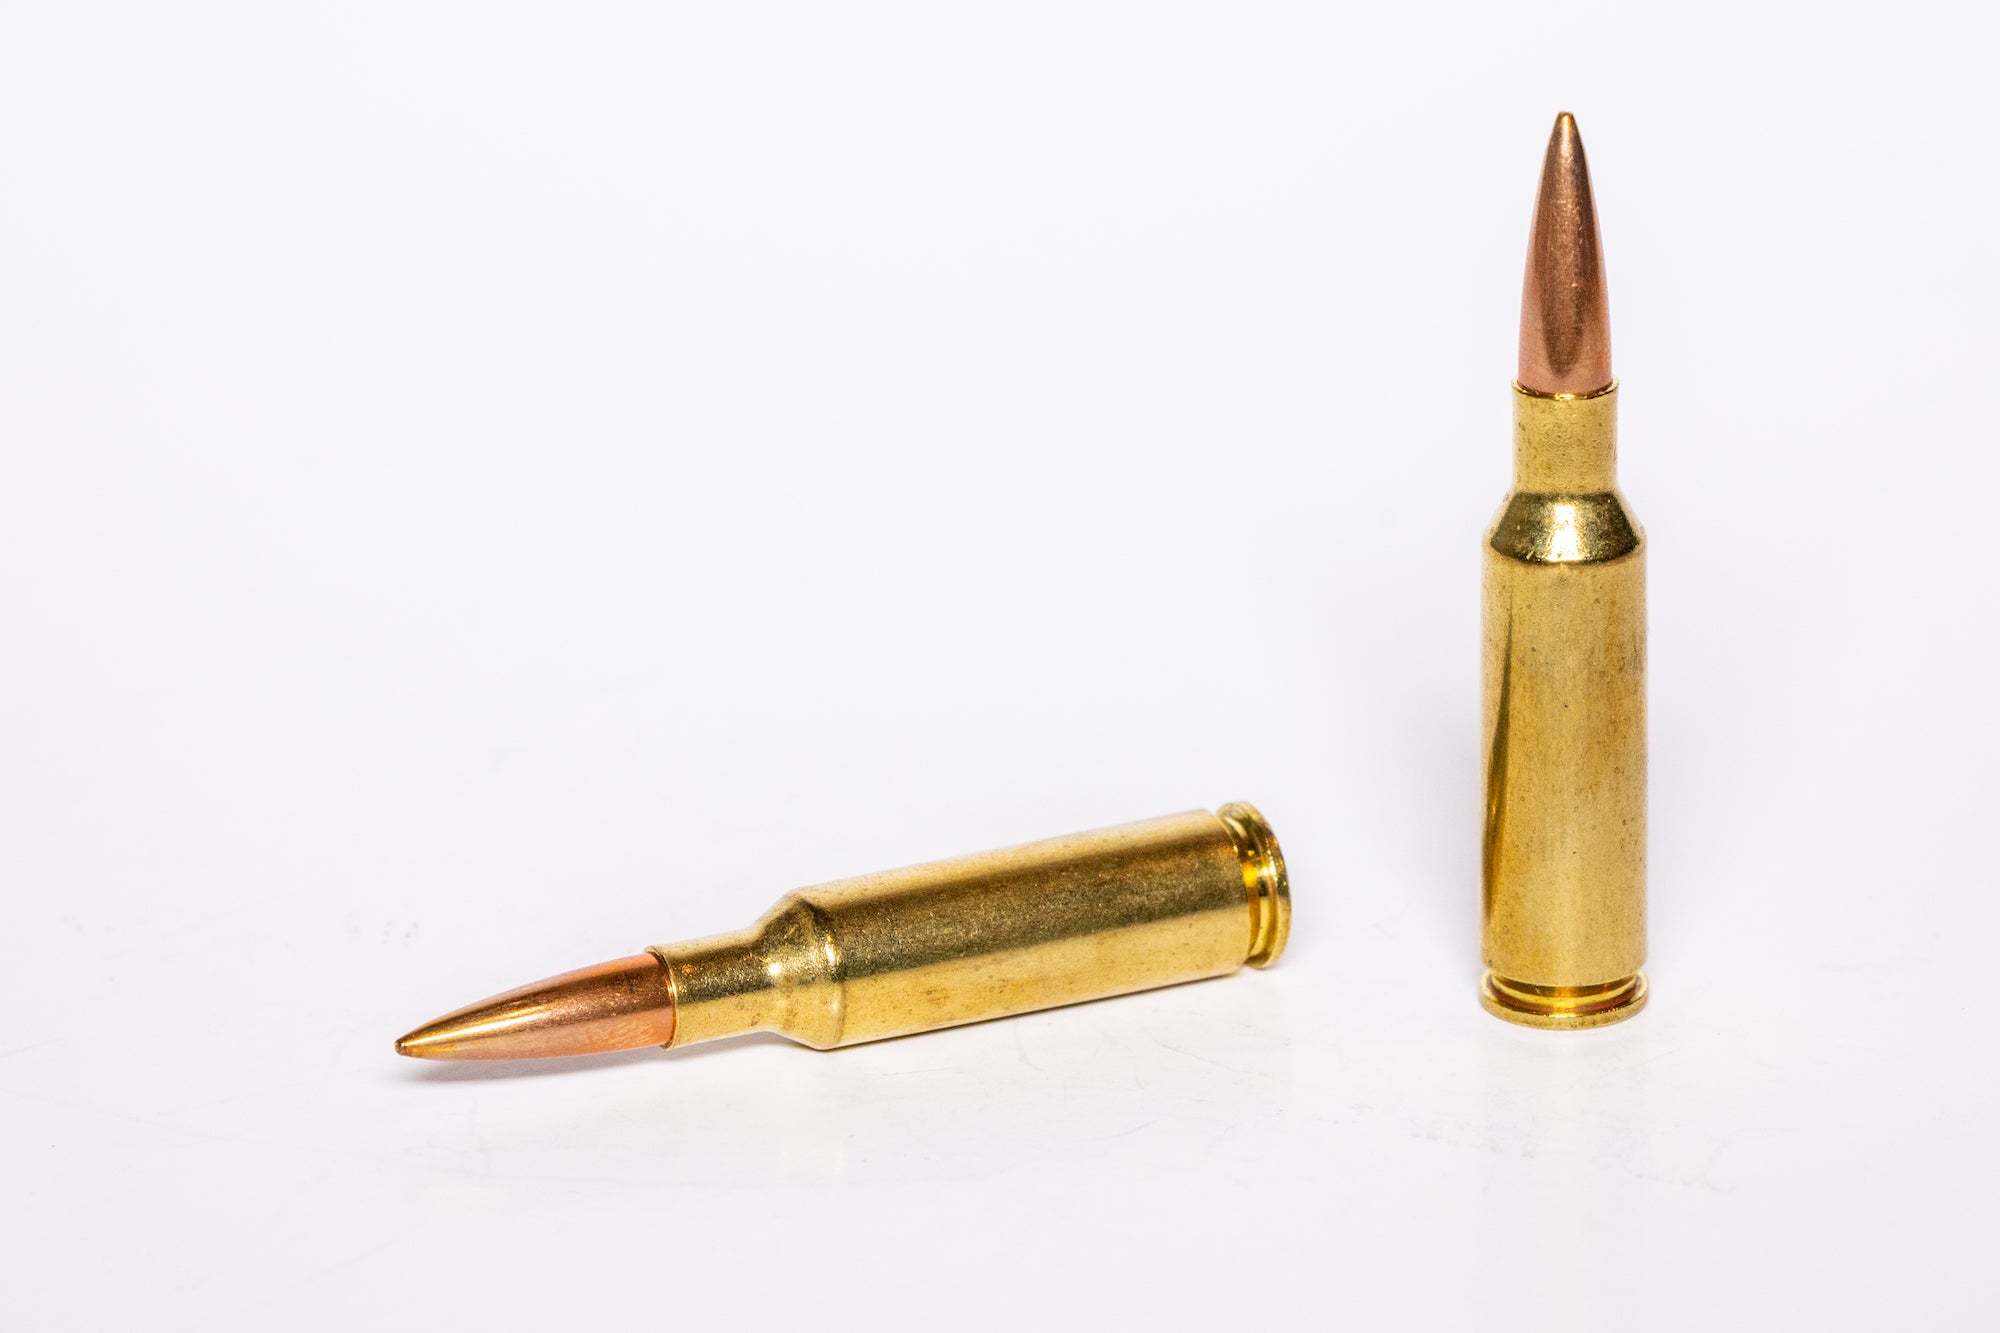 Rifle cartridge on a white background.